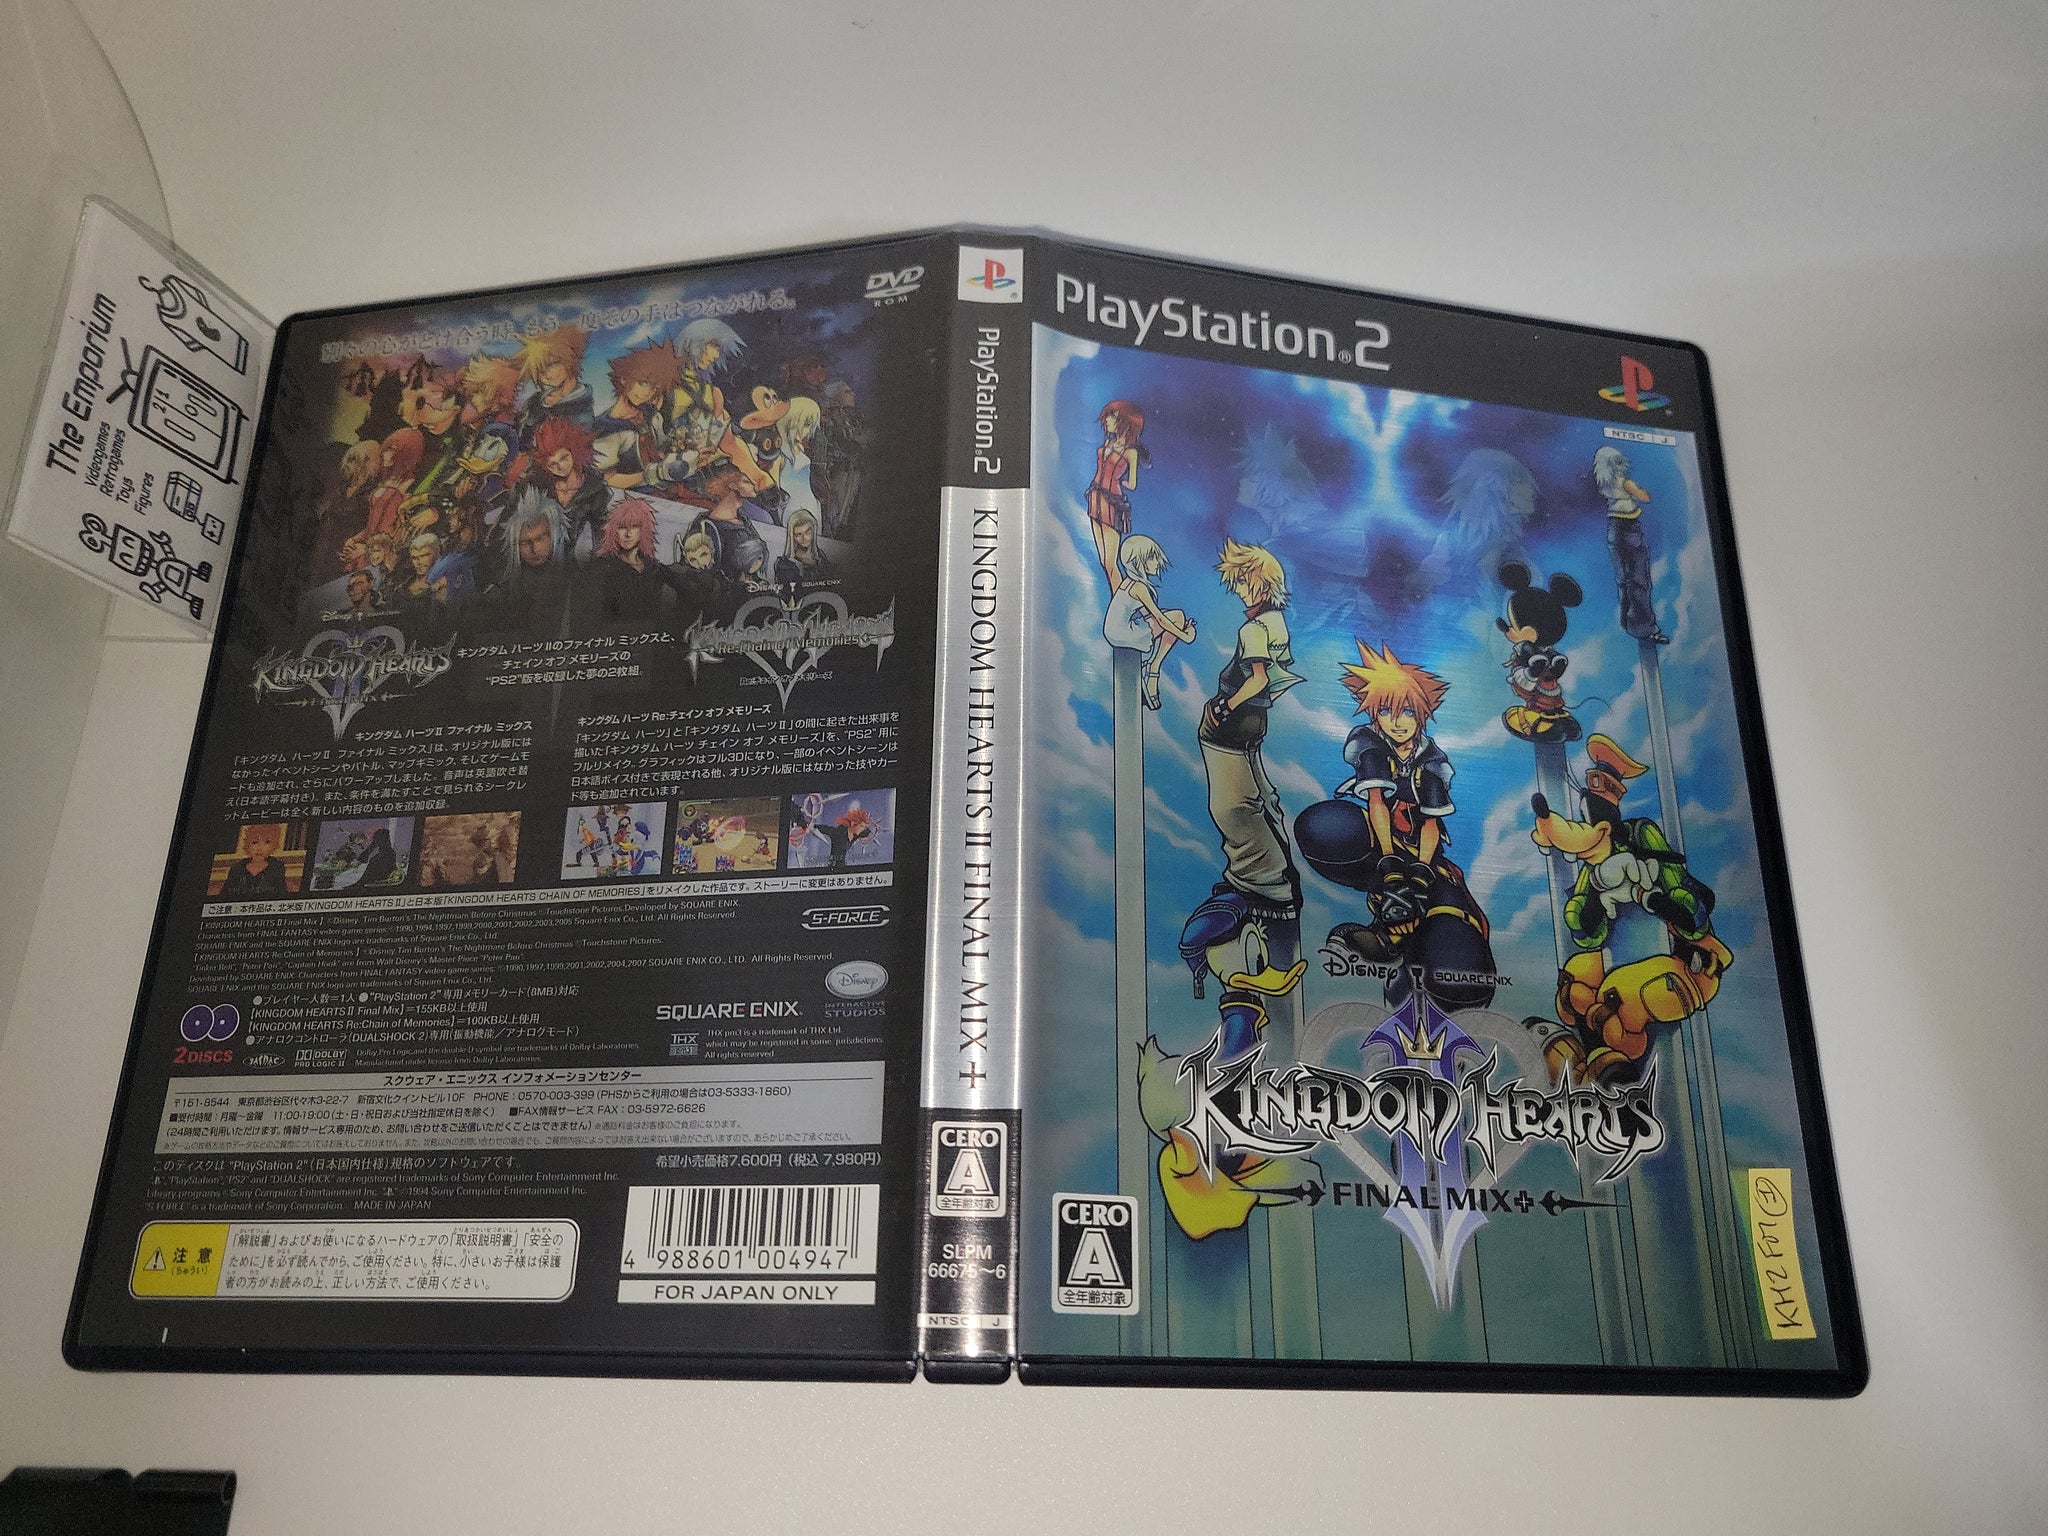 Playstation 2 Disney Kingdom Hearts (PS2) Squaresoft Video Game